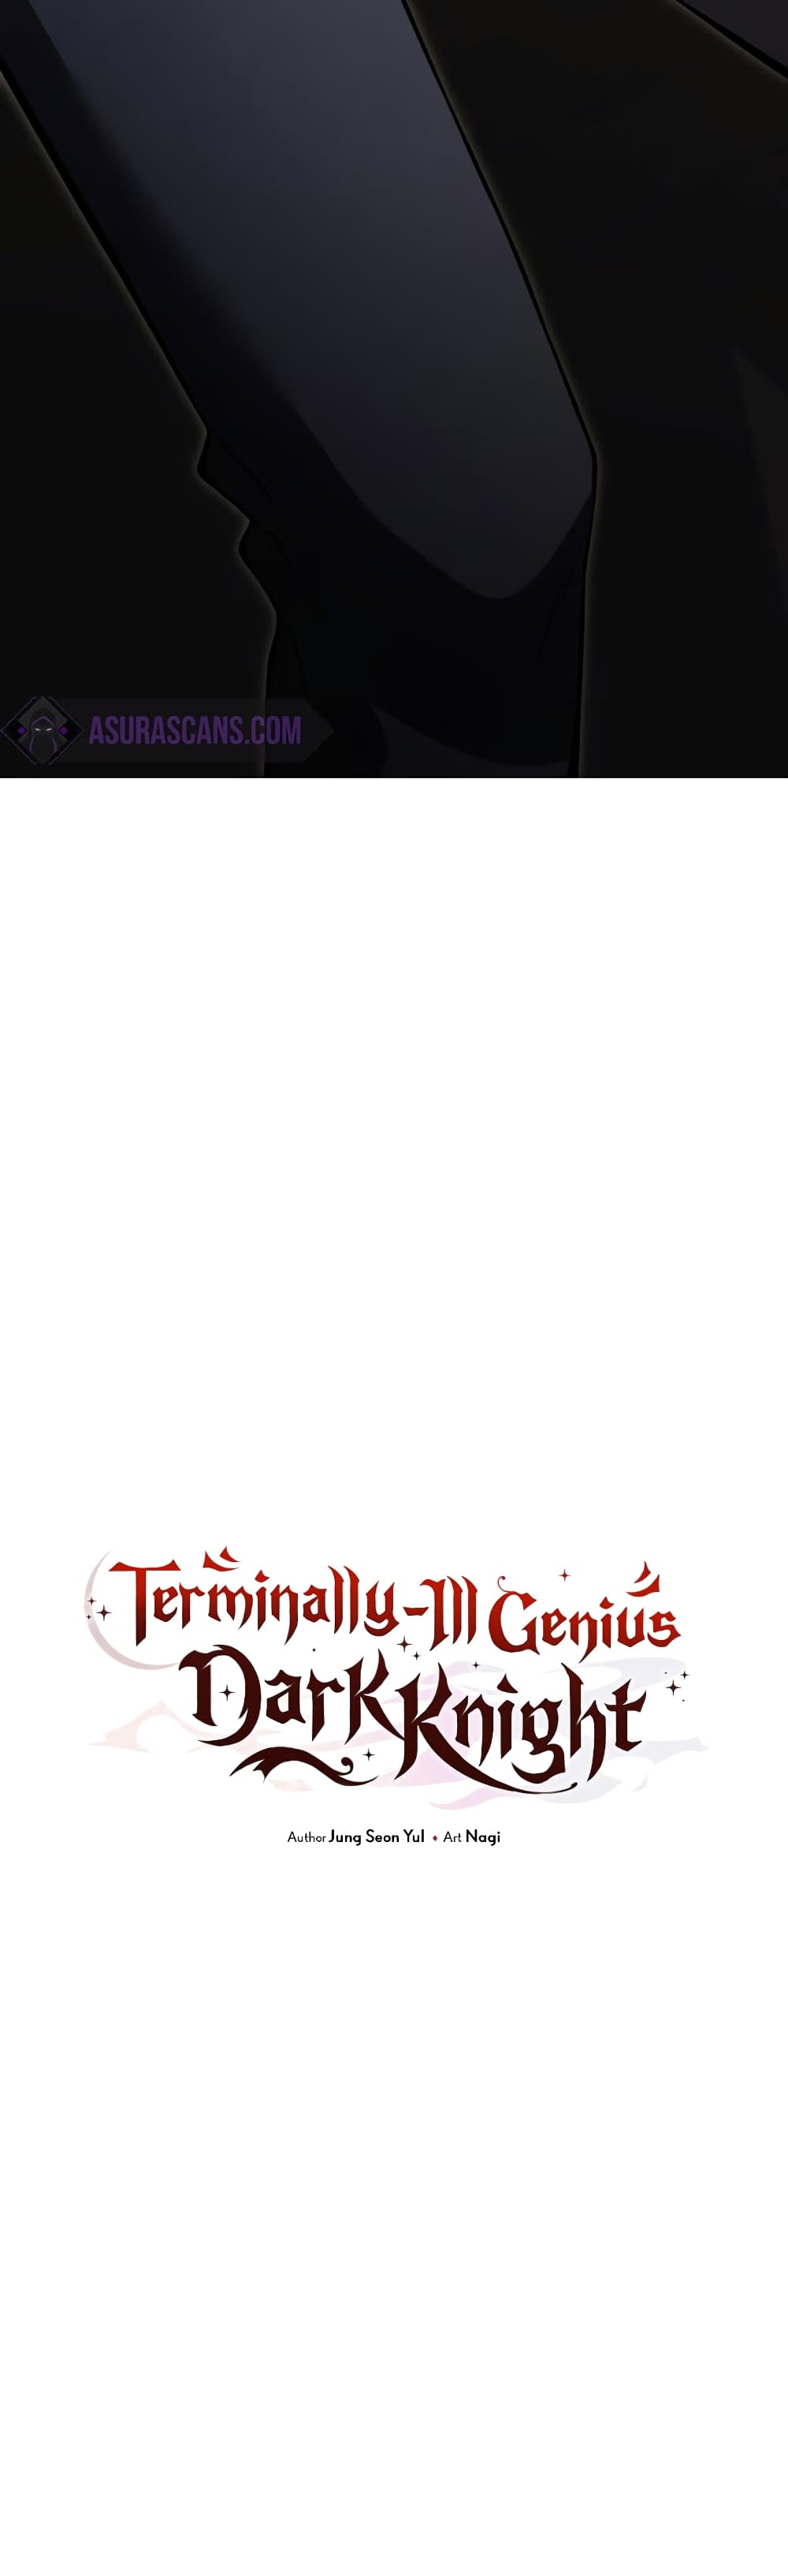 Terminally-III Genius Dark Knight 15-15